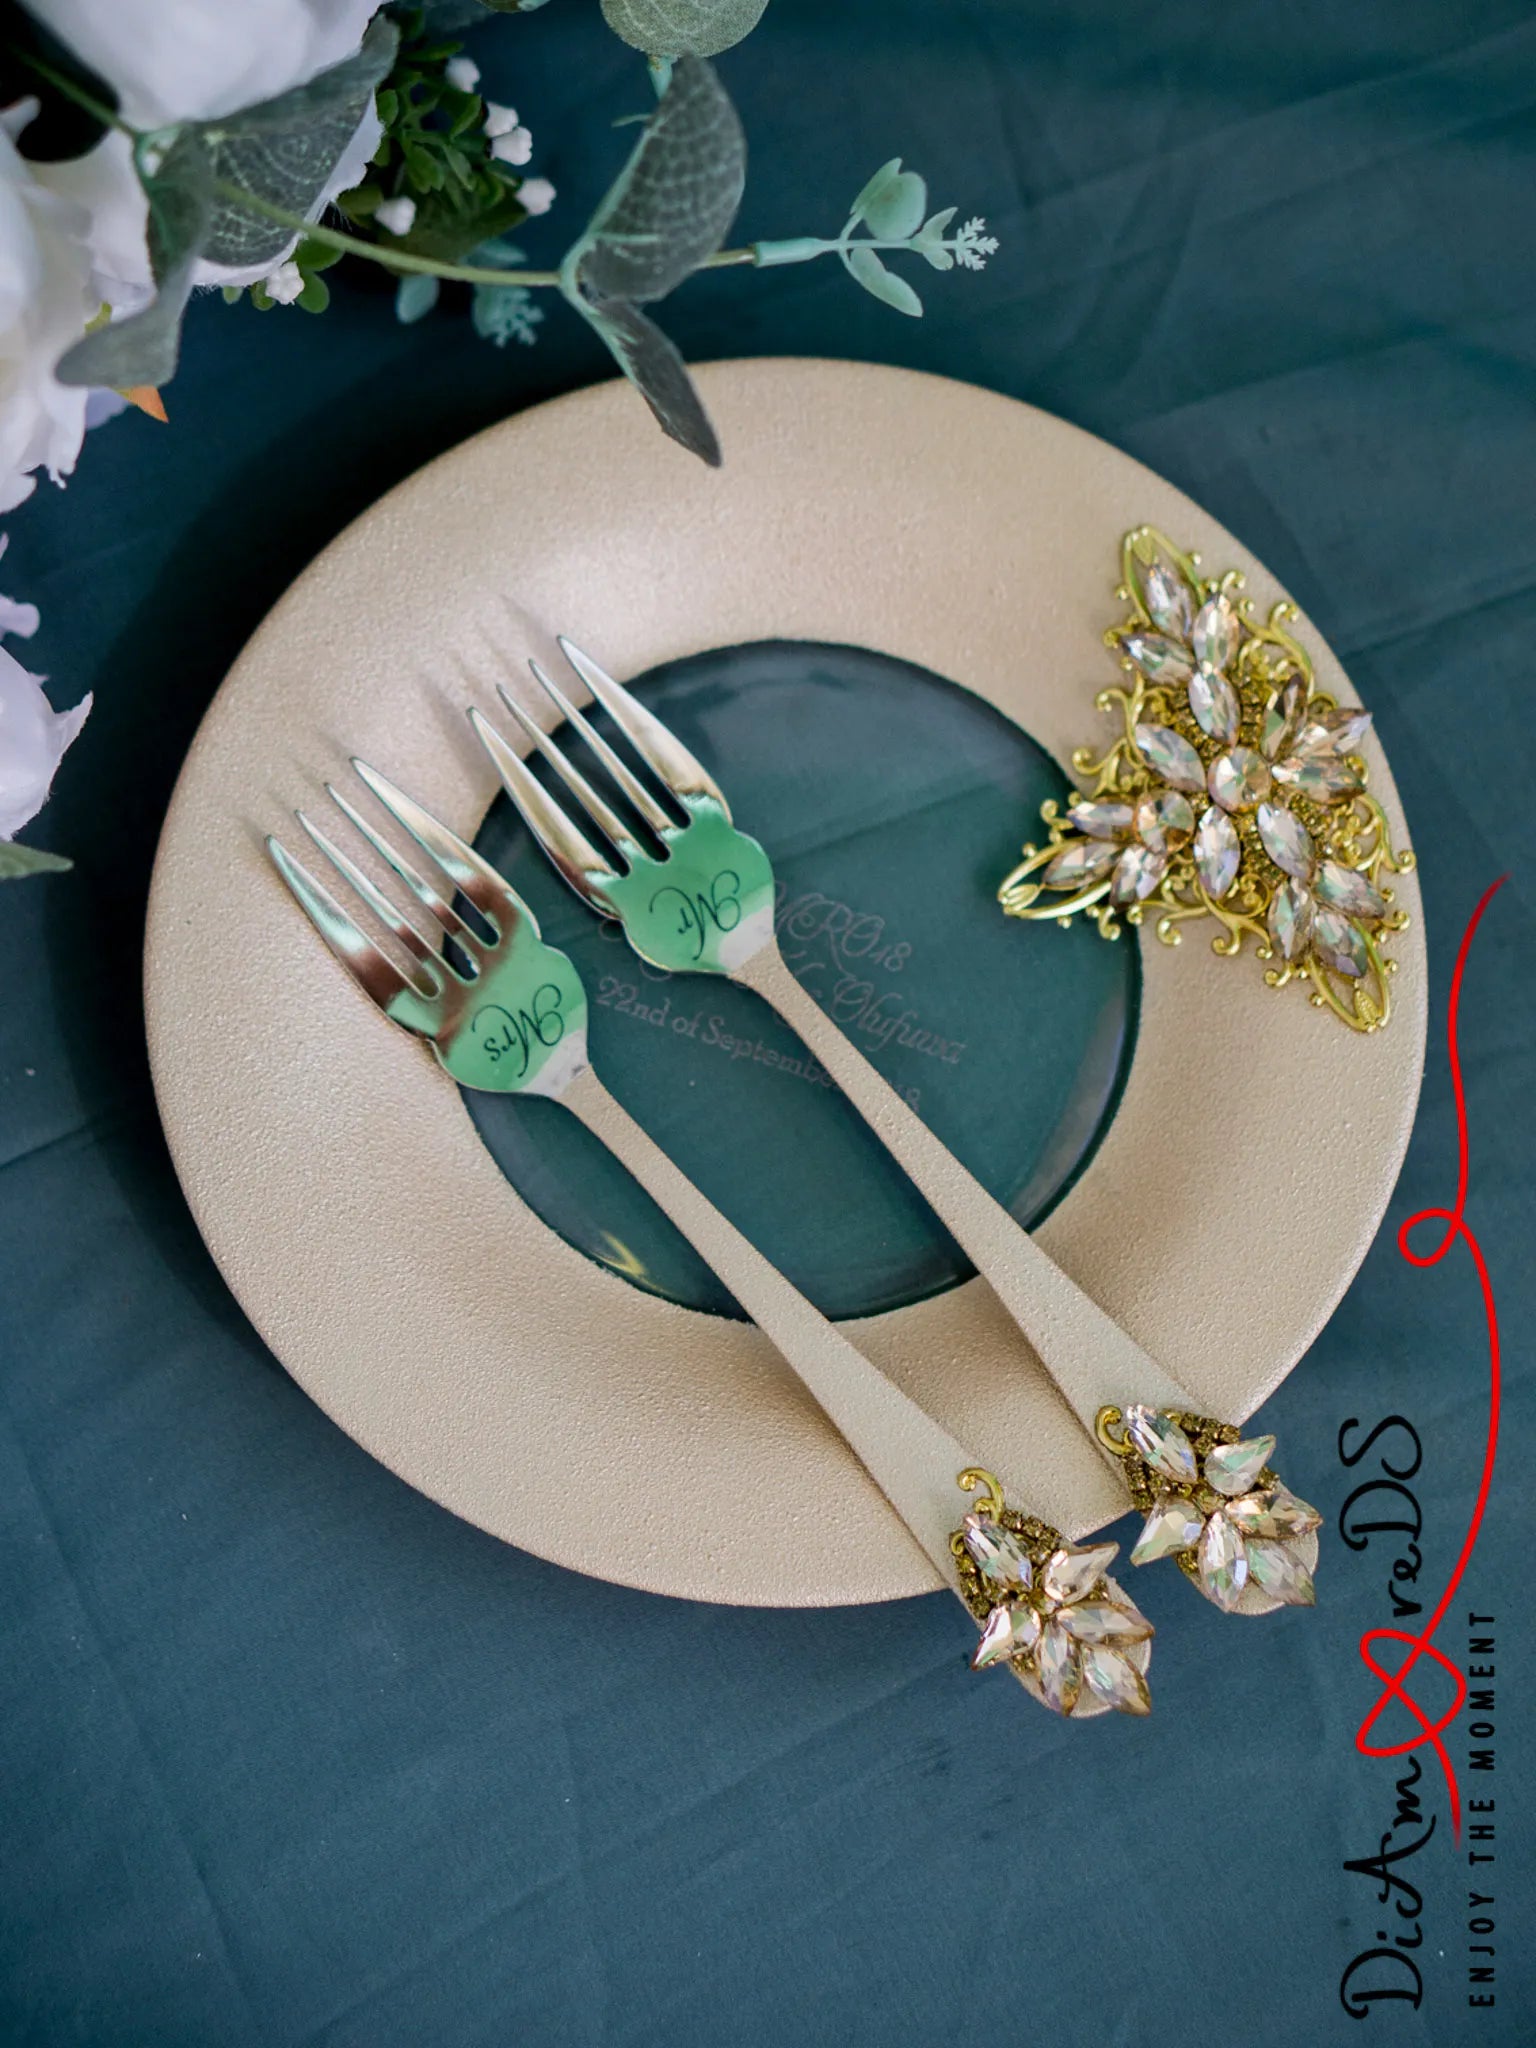 Luxurious Gloria collection dessert utensils and plates